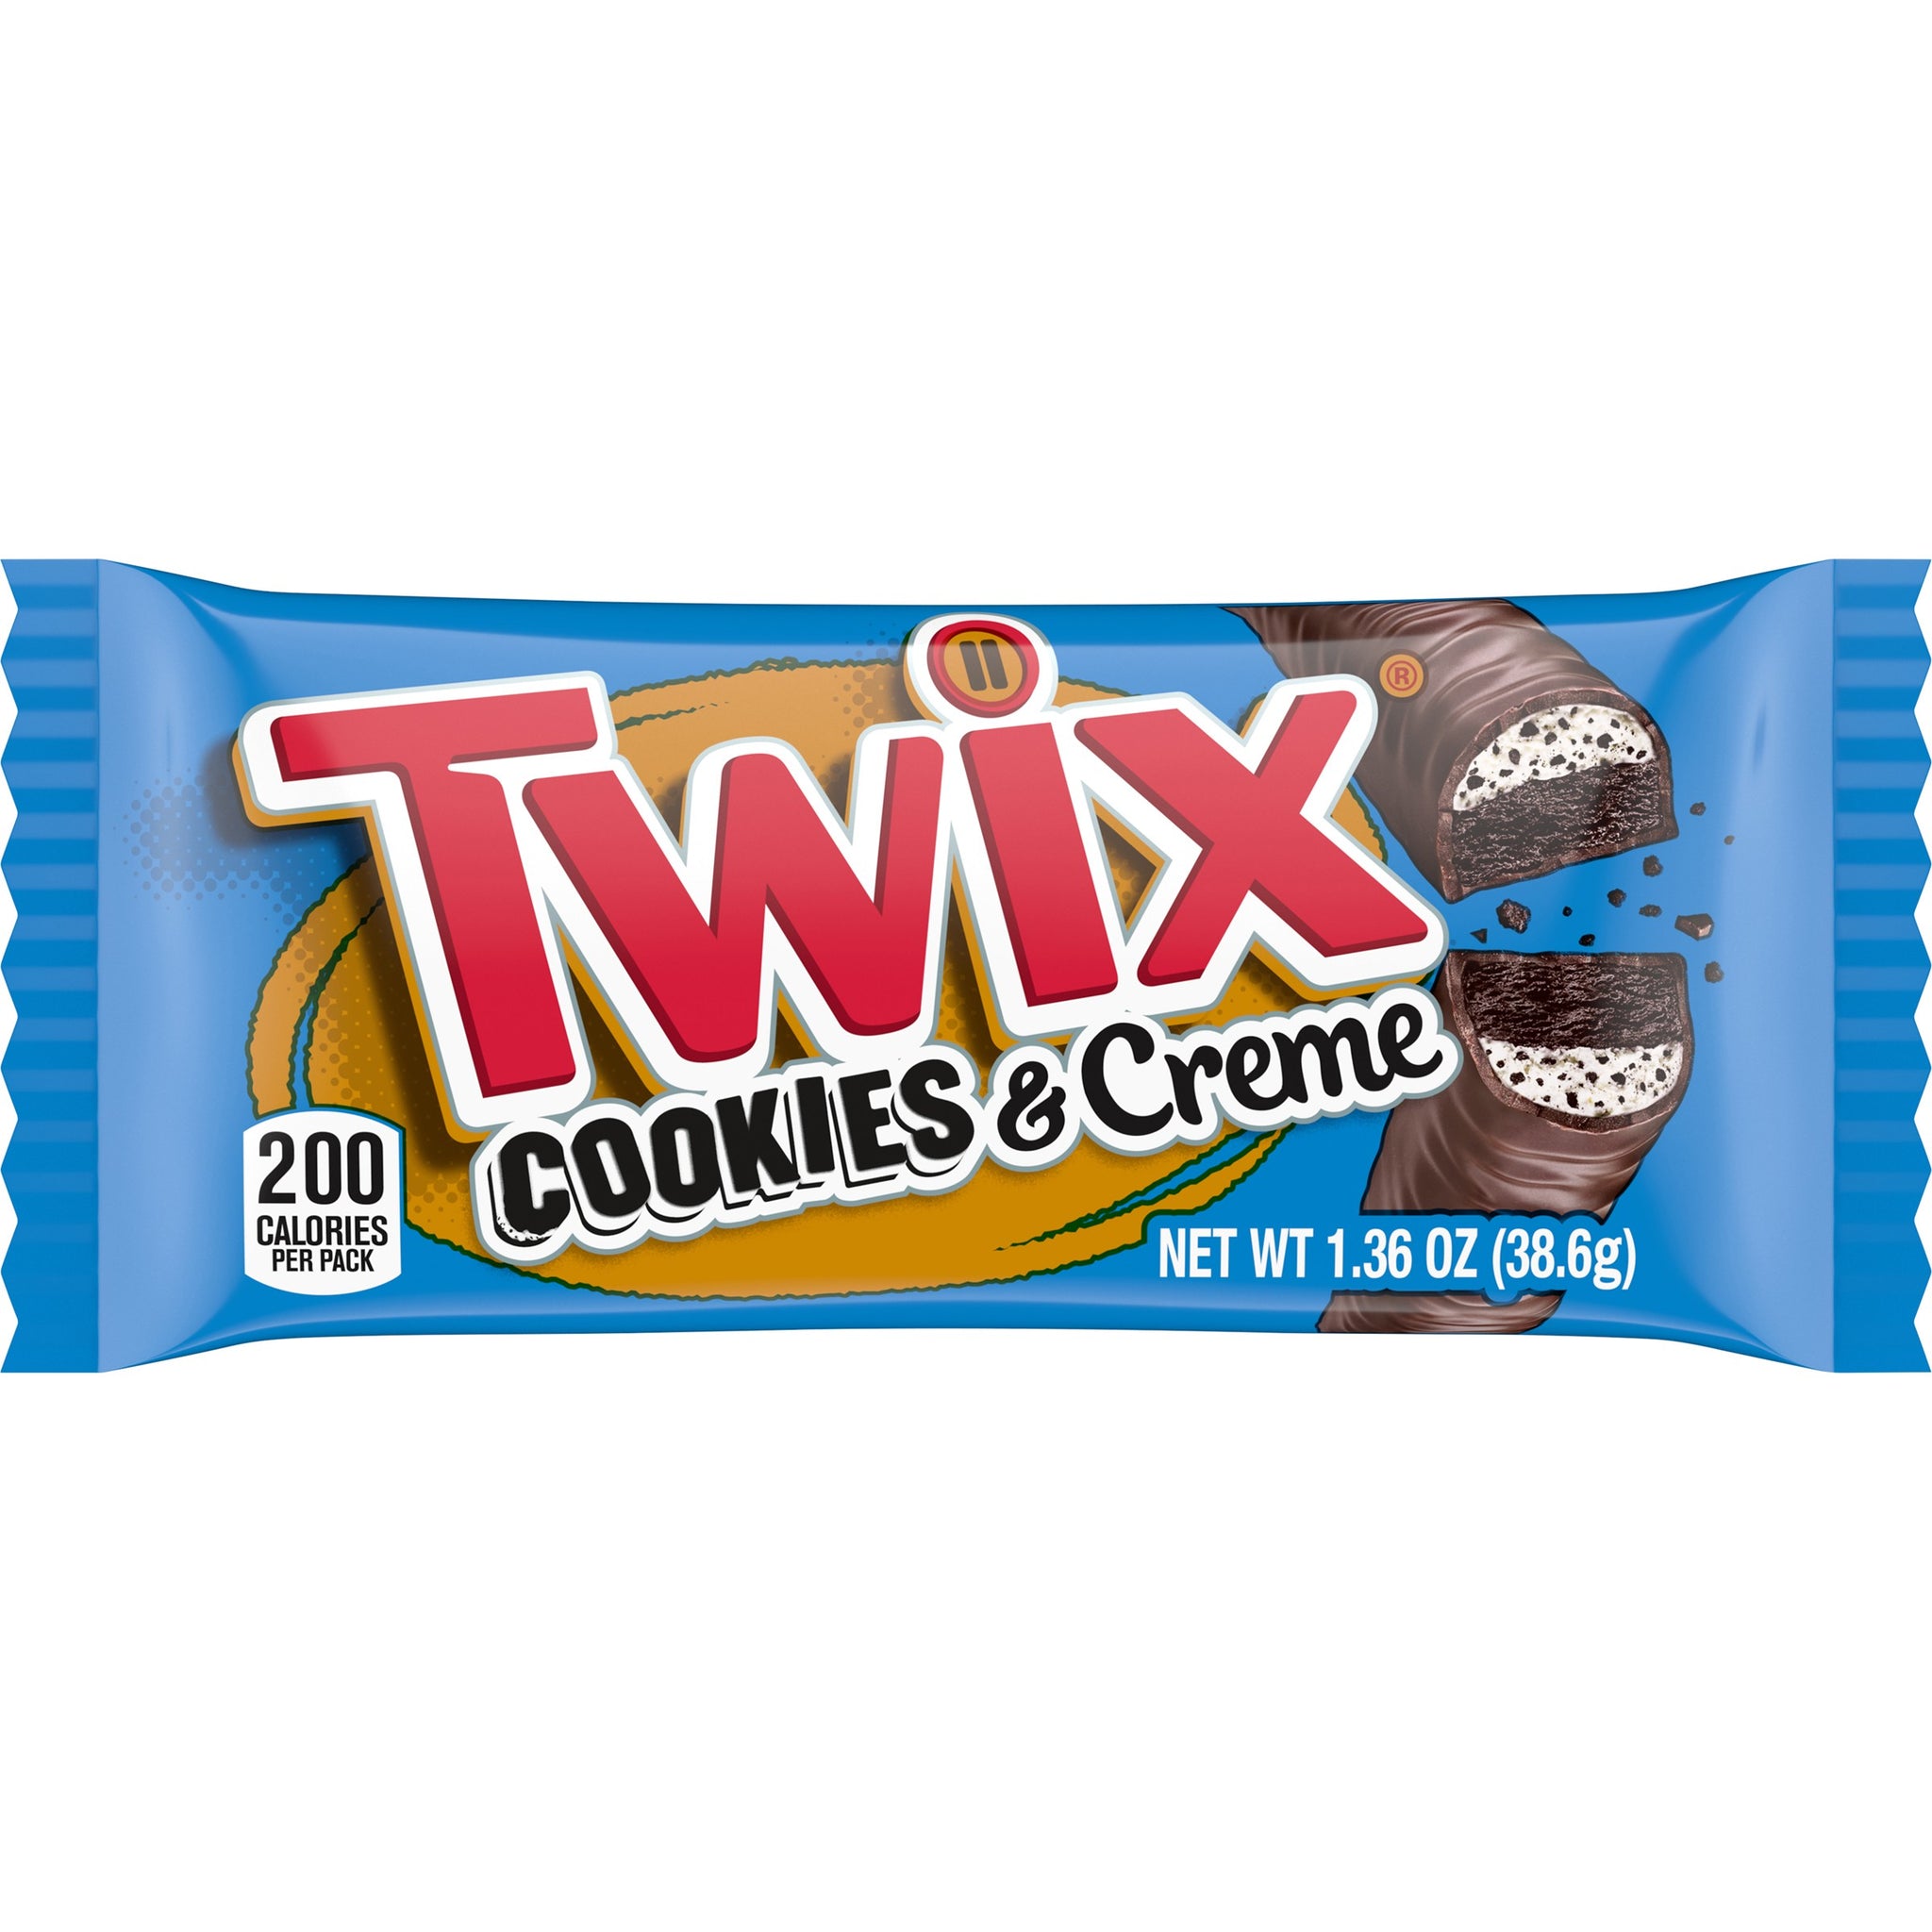 Twix Cookie Bar Minis - 3 LB Bulk Bag - All City Candy